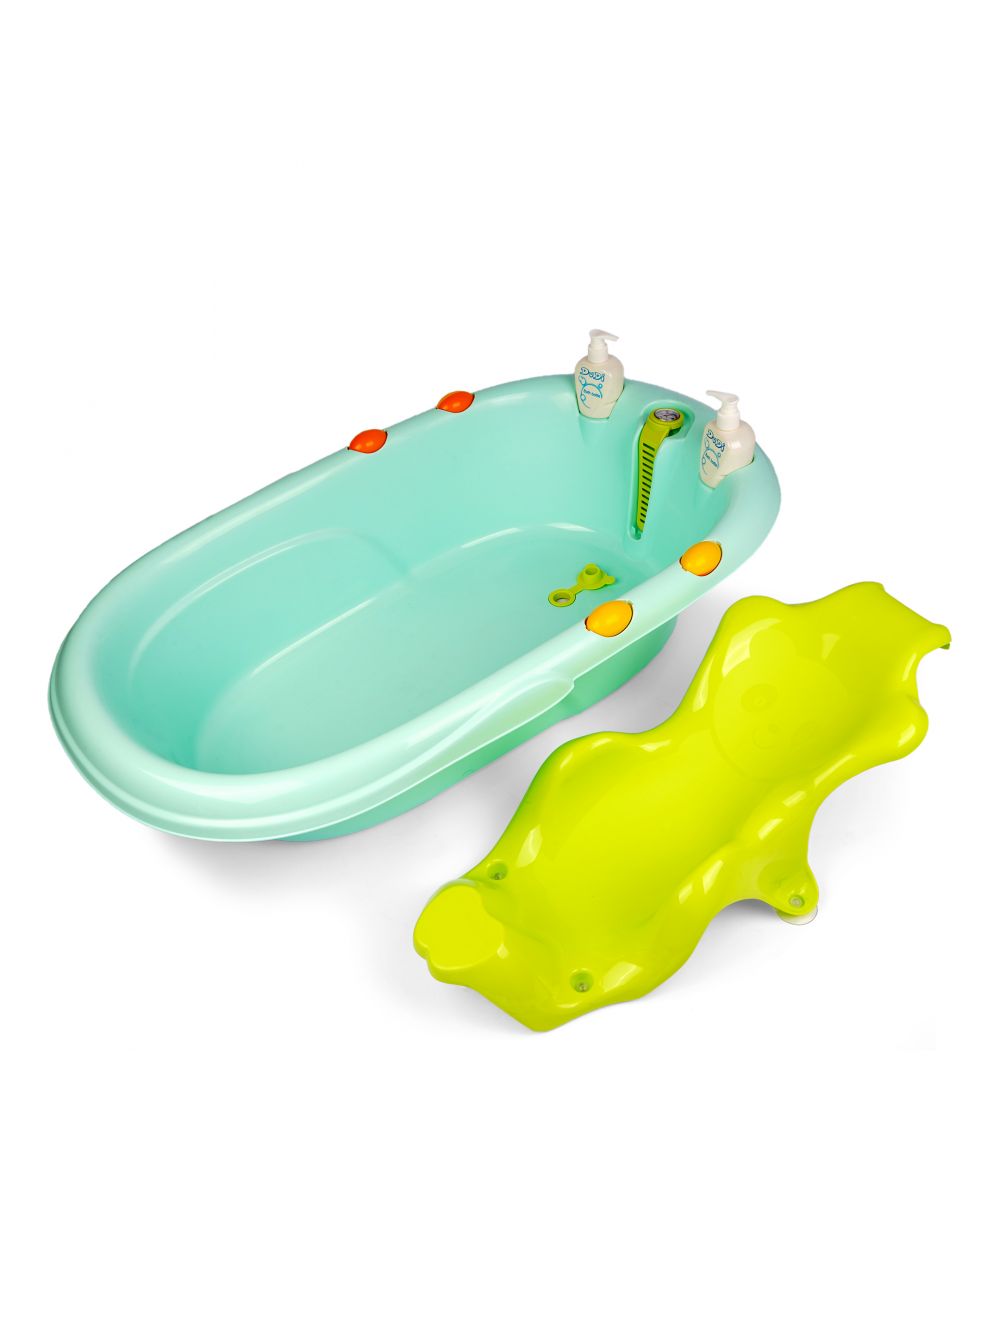 Joymaker Baby Bathtub Green